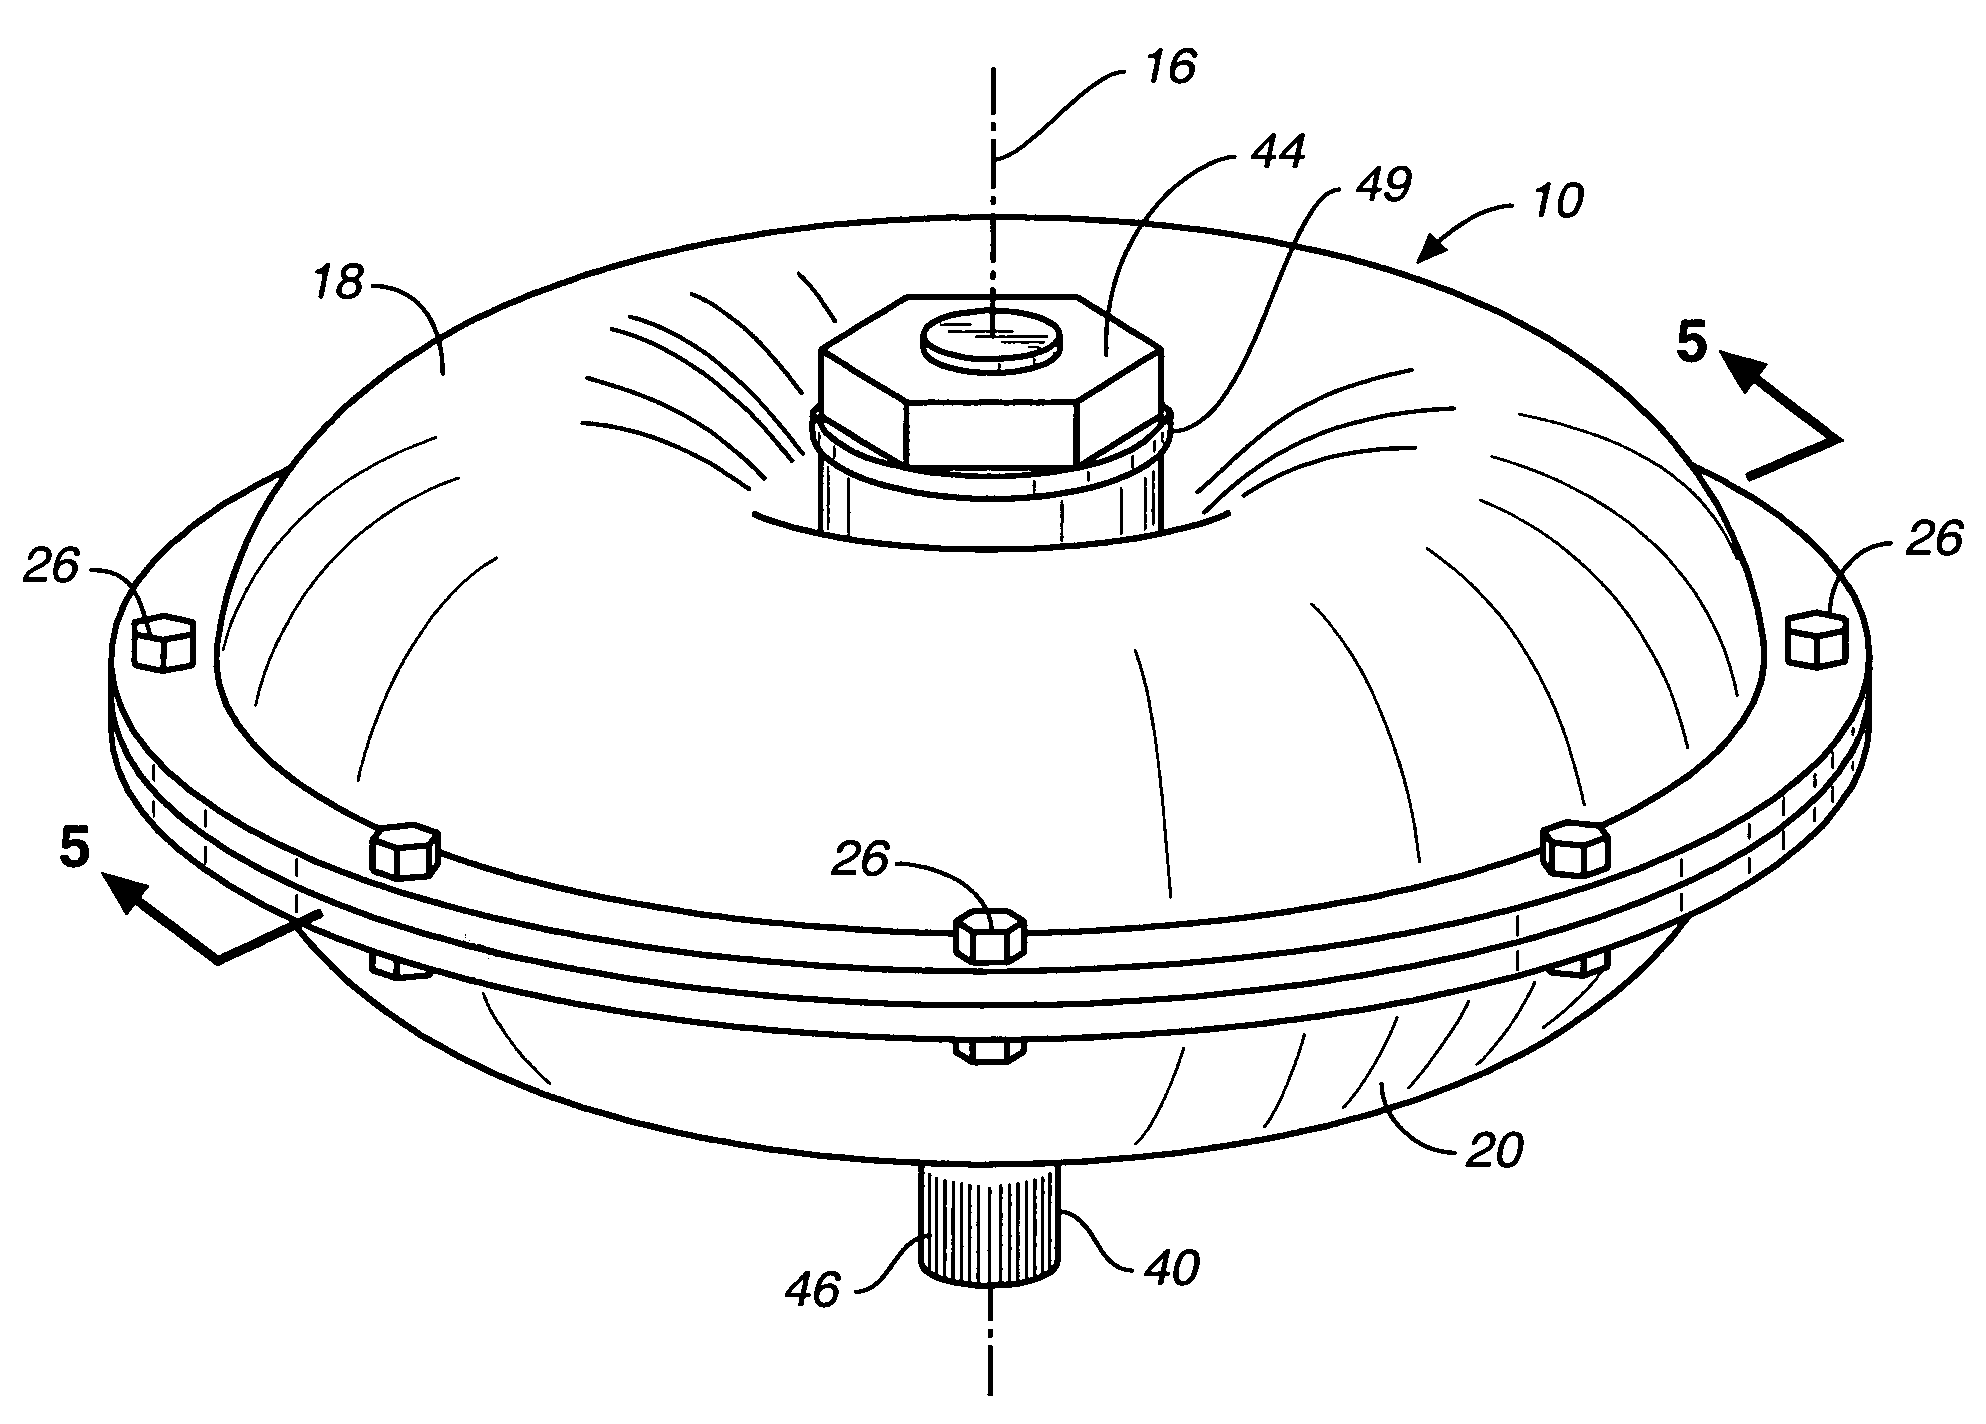 Toroidal rotary damper apparatus